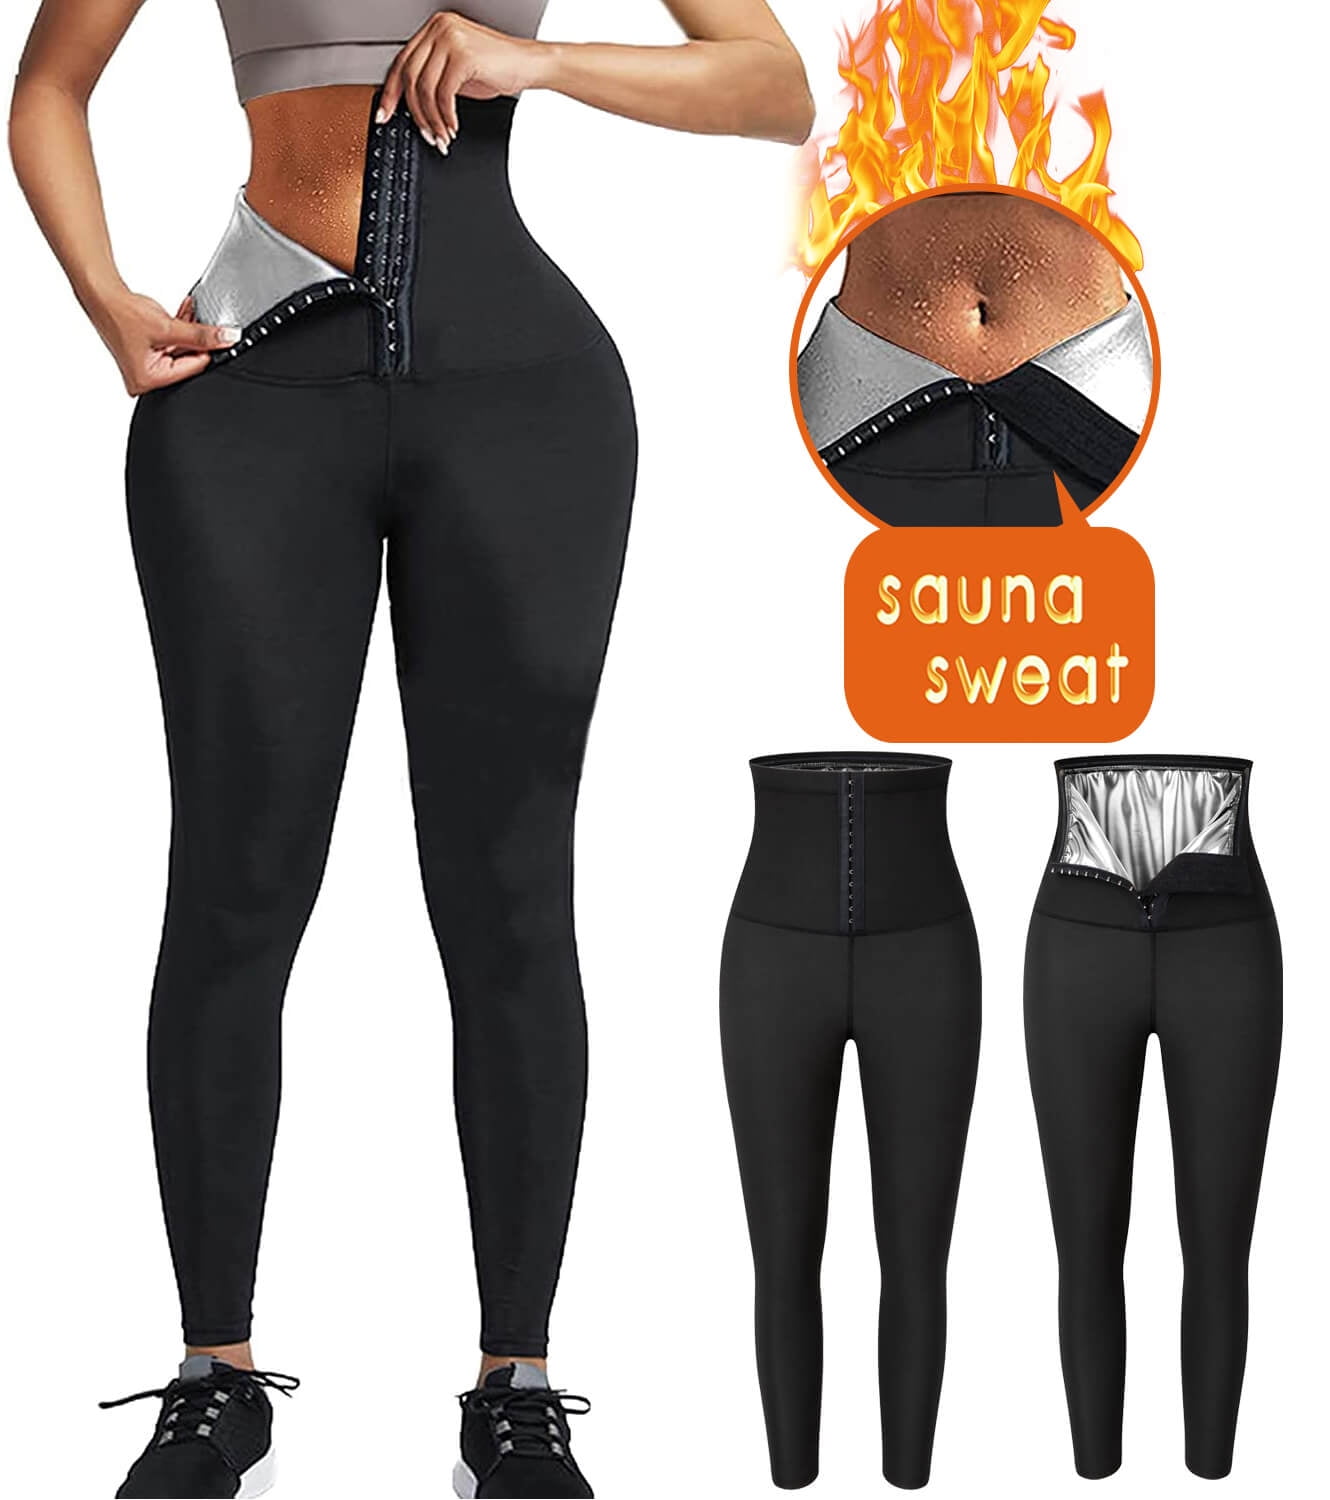 Vaslanda Thermo Sweat Sauna Pants for Women Weight Loss